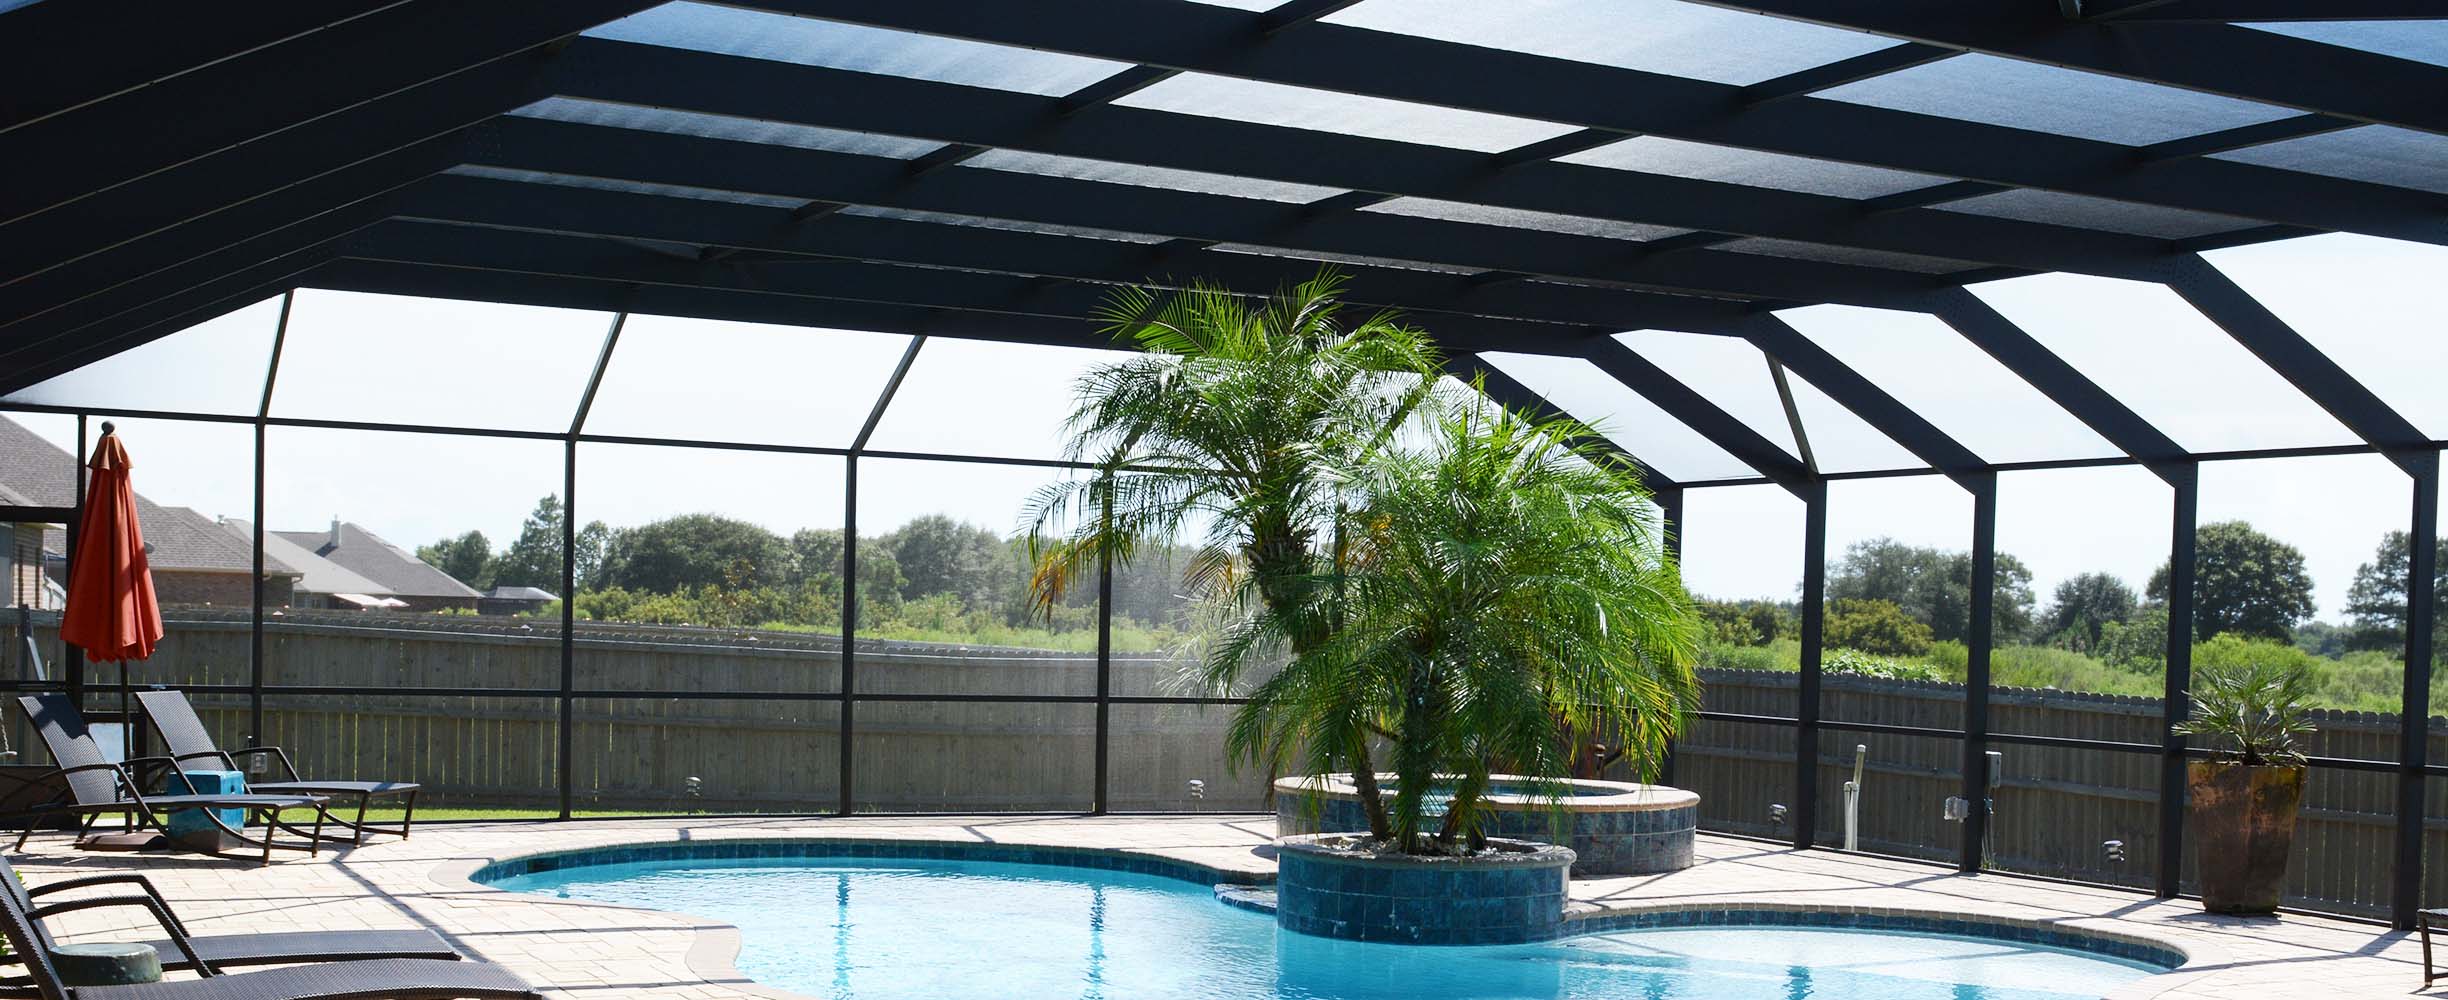 Custom designed swimming pool enclosure in Foley, Alabama